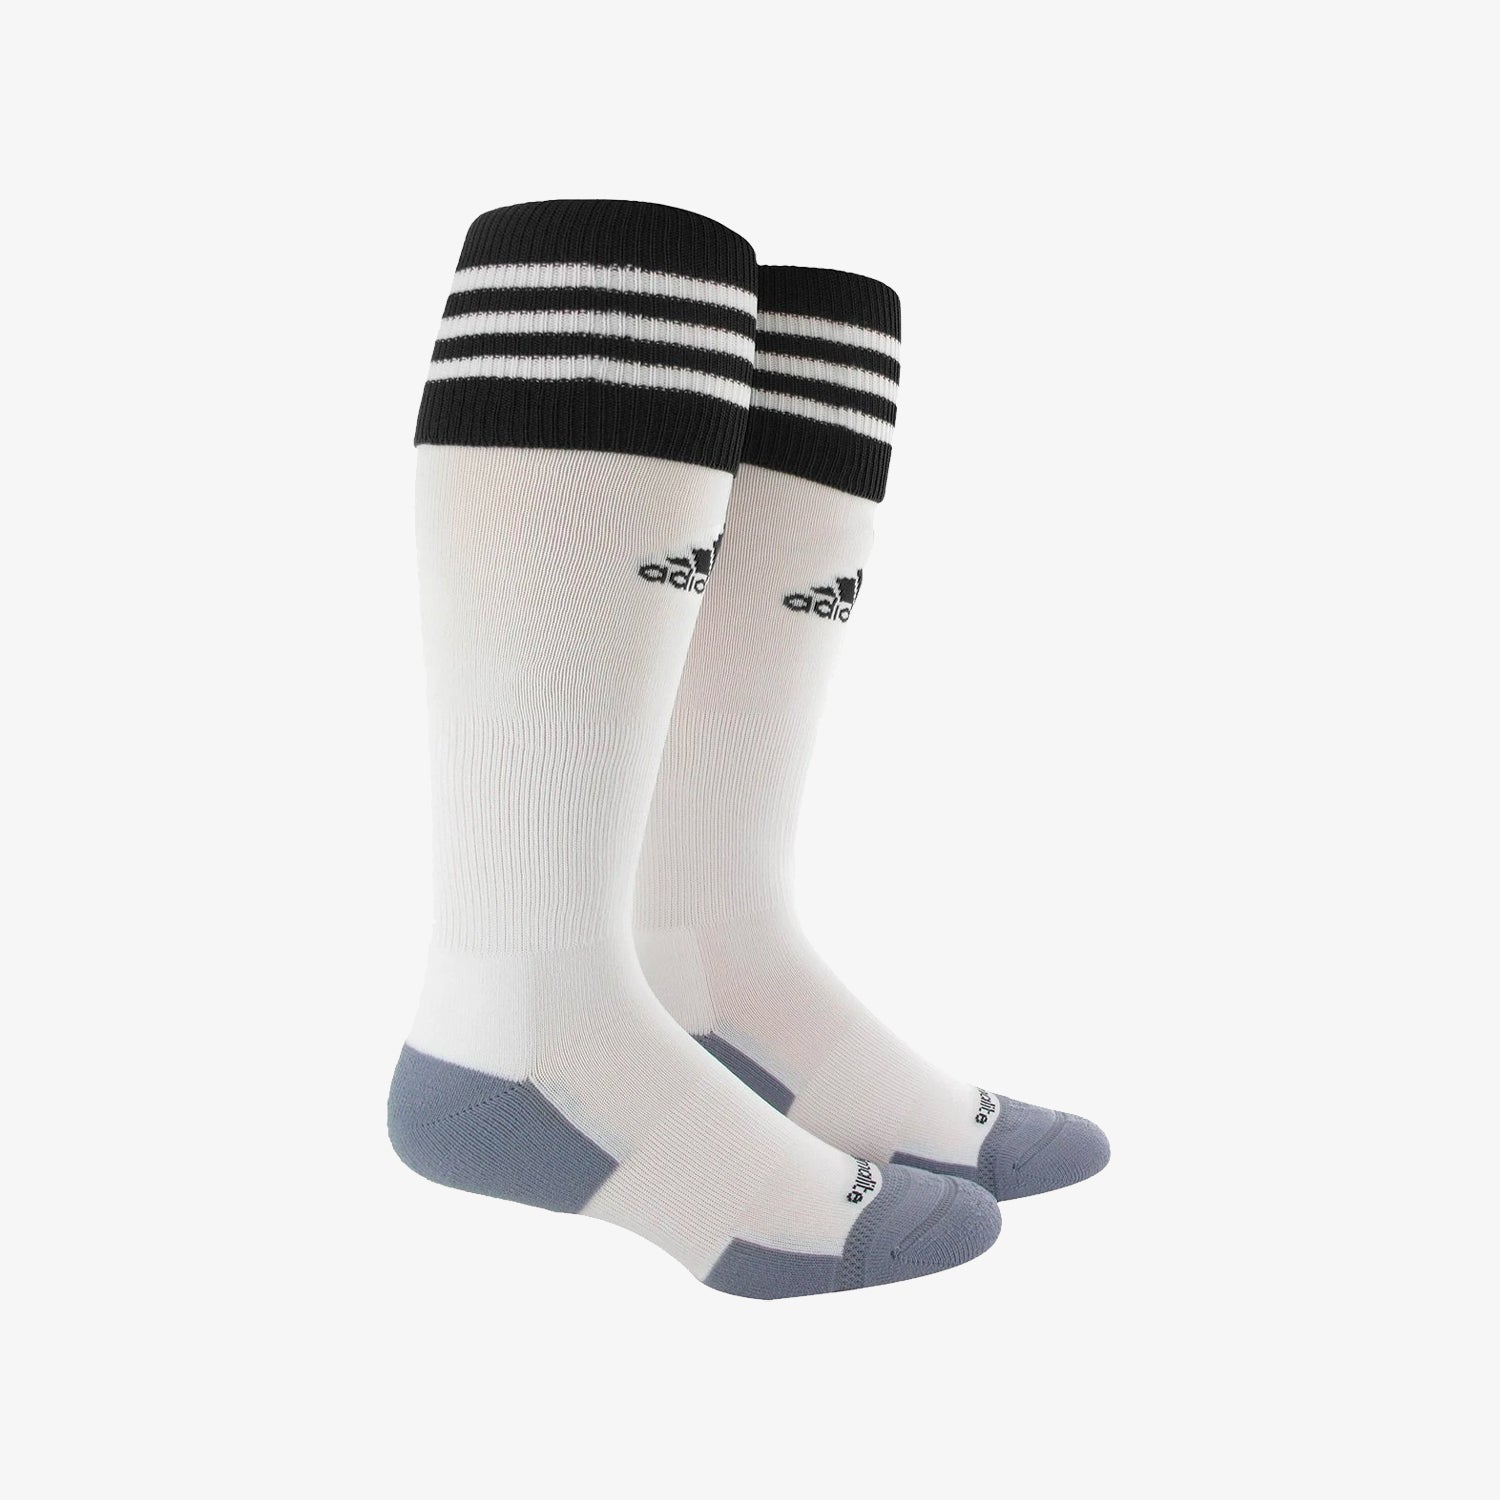 Copa Zone Cushion 2.0 Soccer Socks X-Small - White/Black